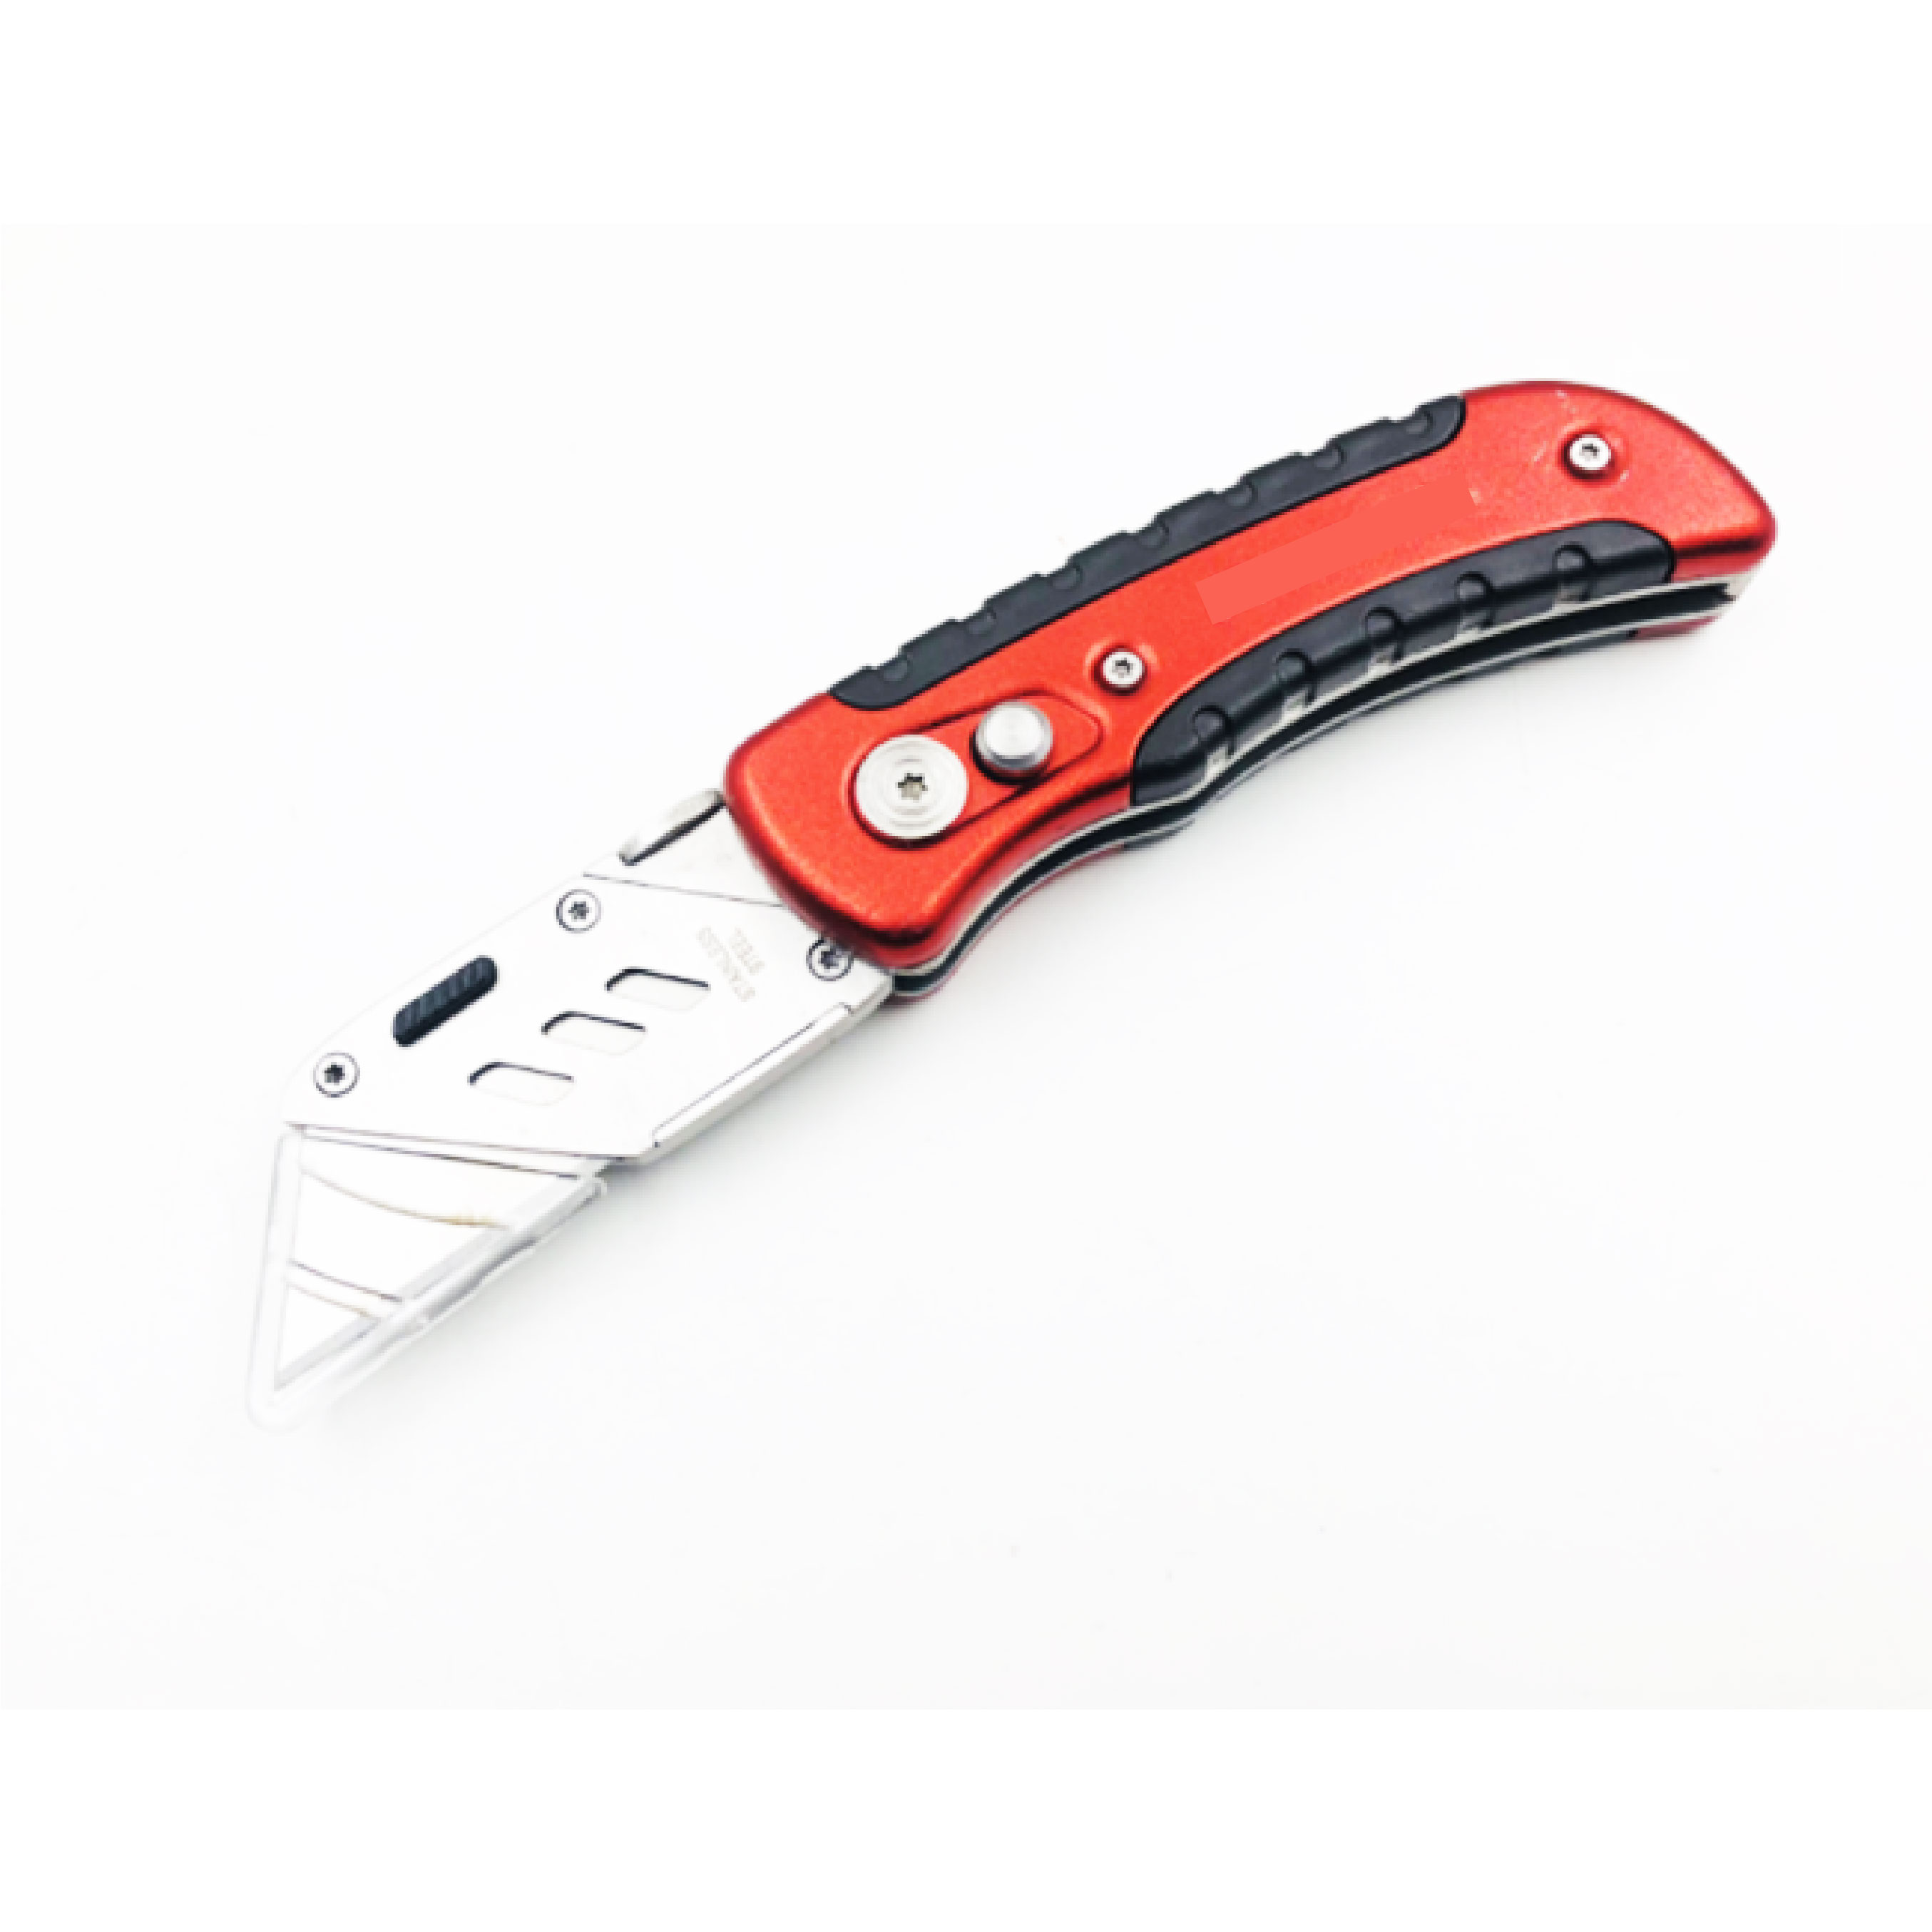 Die-cast Steel Blade, Aluminum Oxide + Plastic Handle Utility Knife&Cutter Tool Set Kits